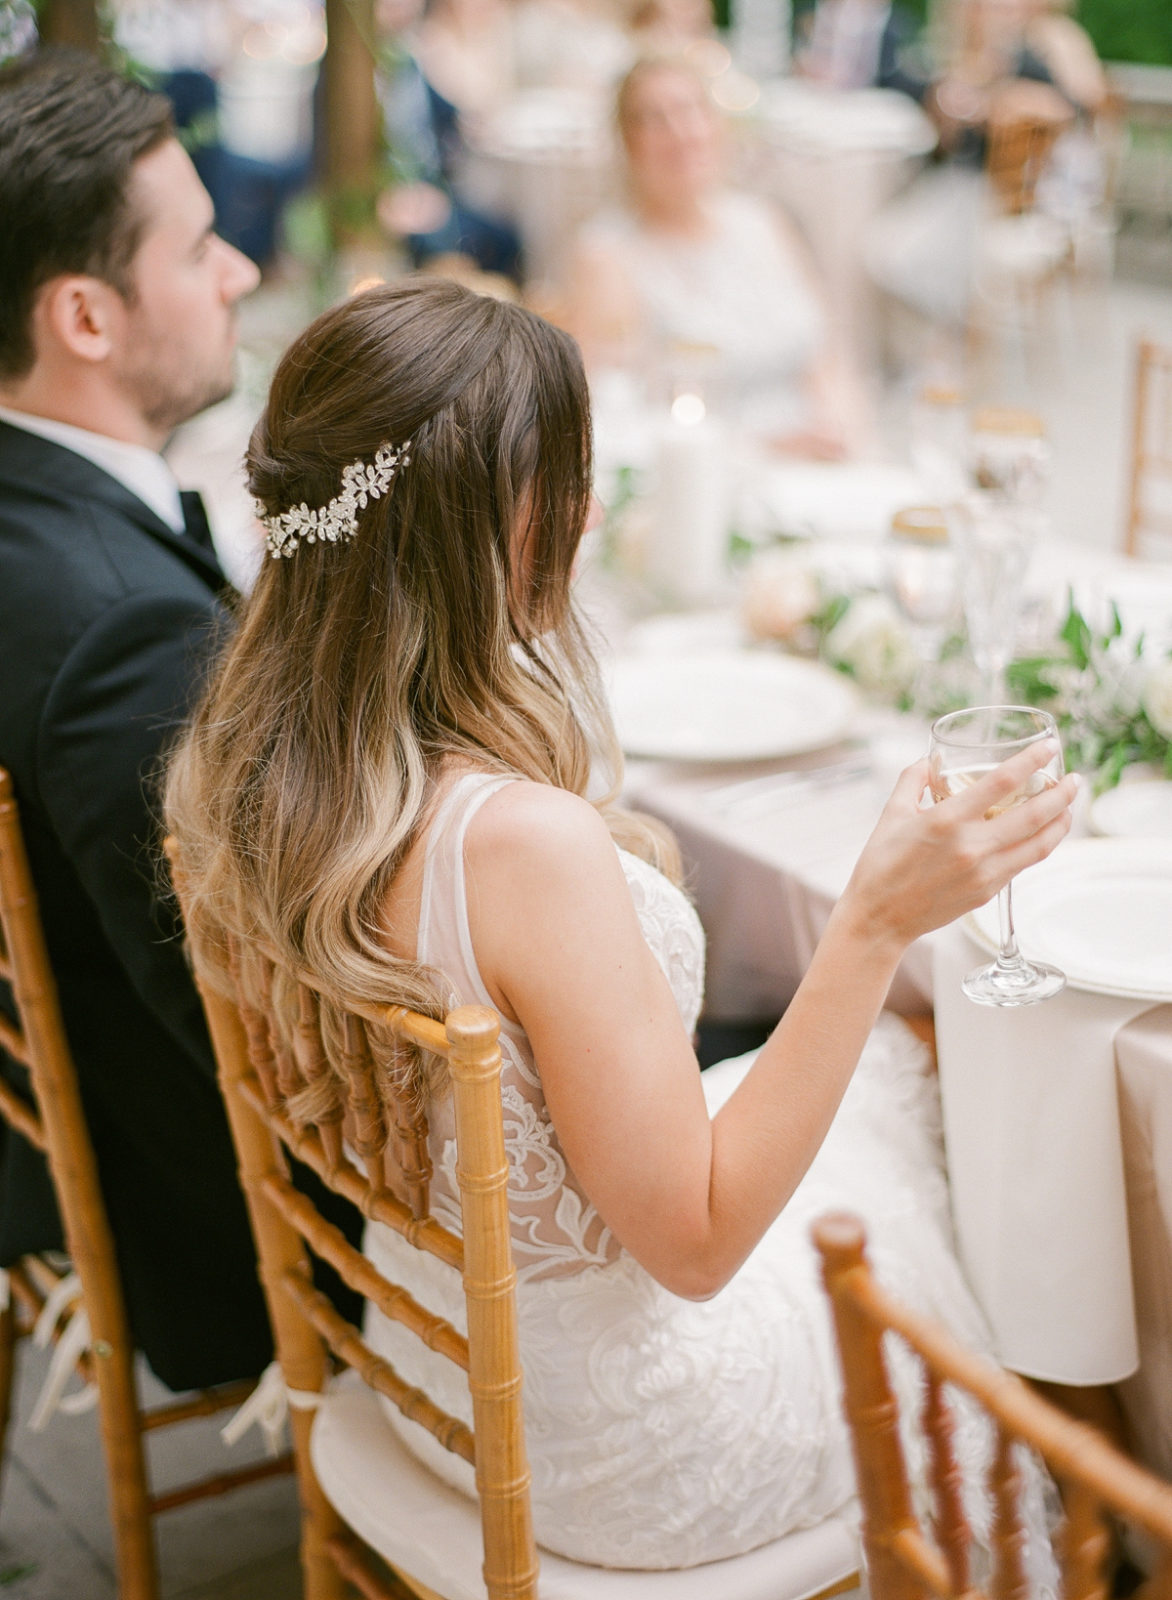 Laurel Hall Wedding Photos | Molly Carr Photography | Fine Art Film Photographer | Chicago Wedding | Summer Garden Party Wedding | European Wedding Inspiration | Outdoor Wedding Reception